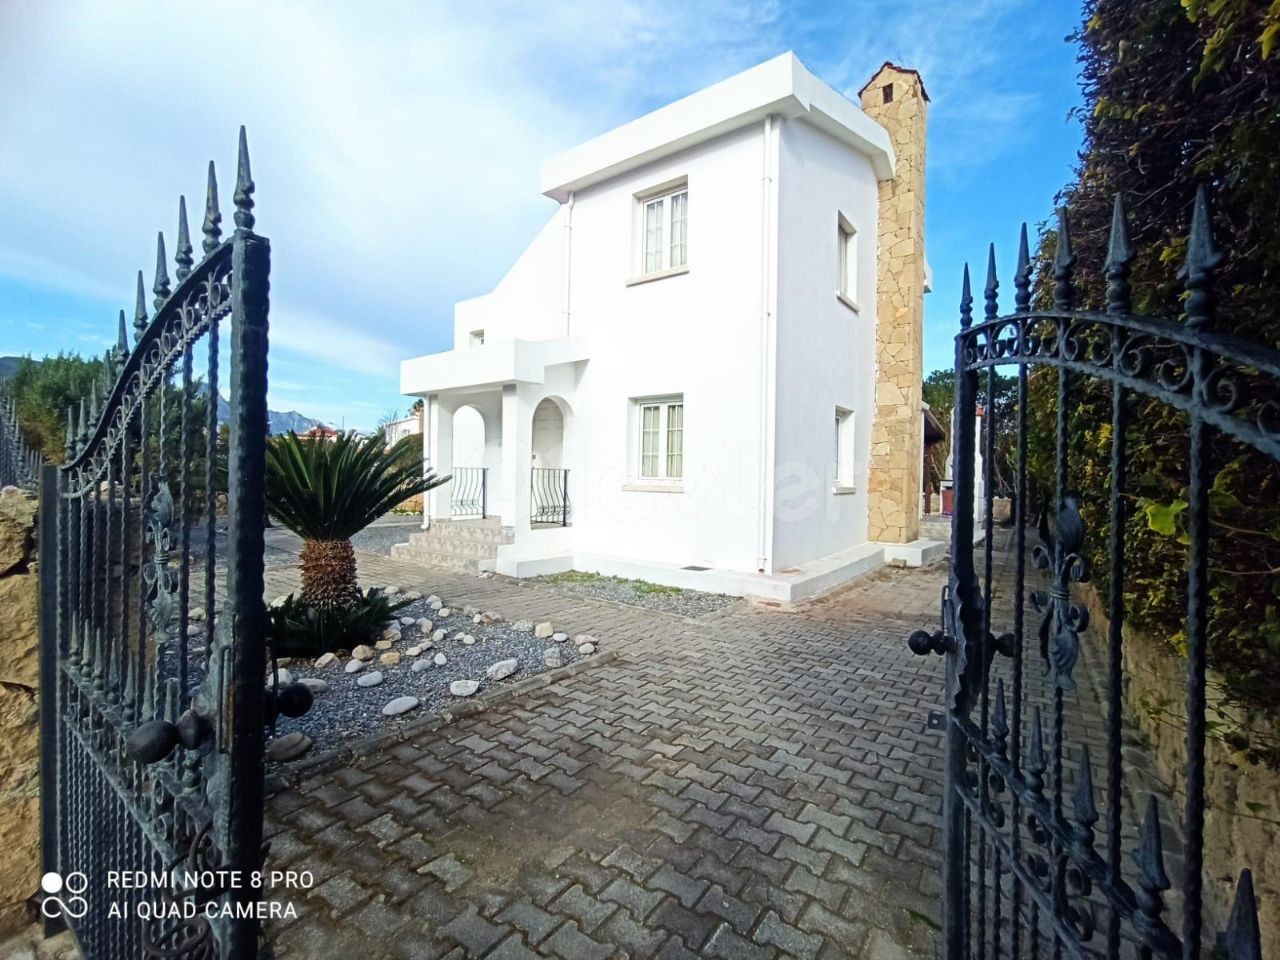 3 bedroom villa for rent in Kyrenia, Bellapais